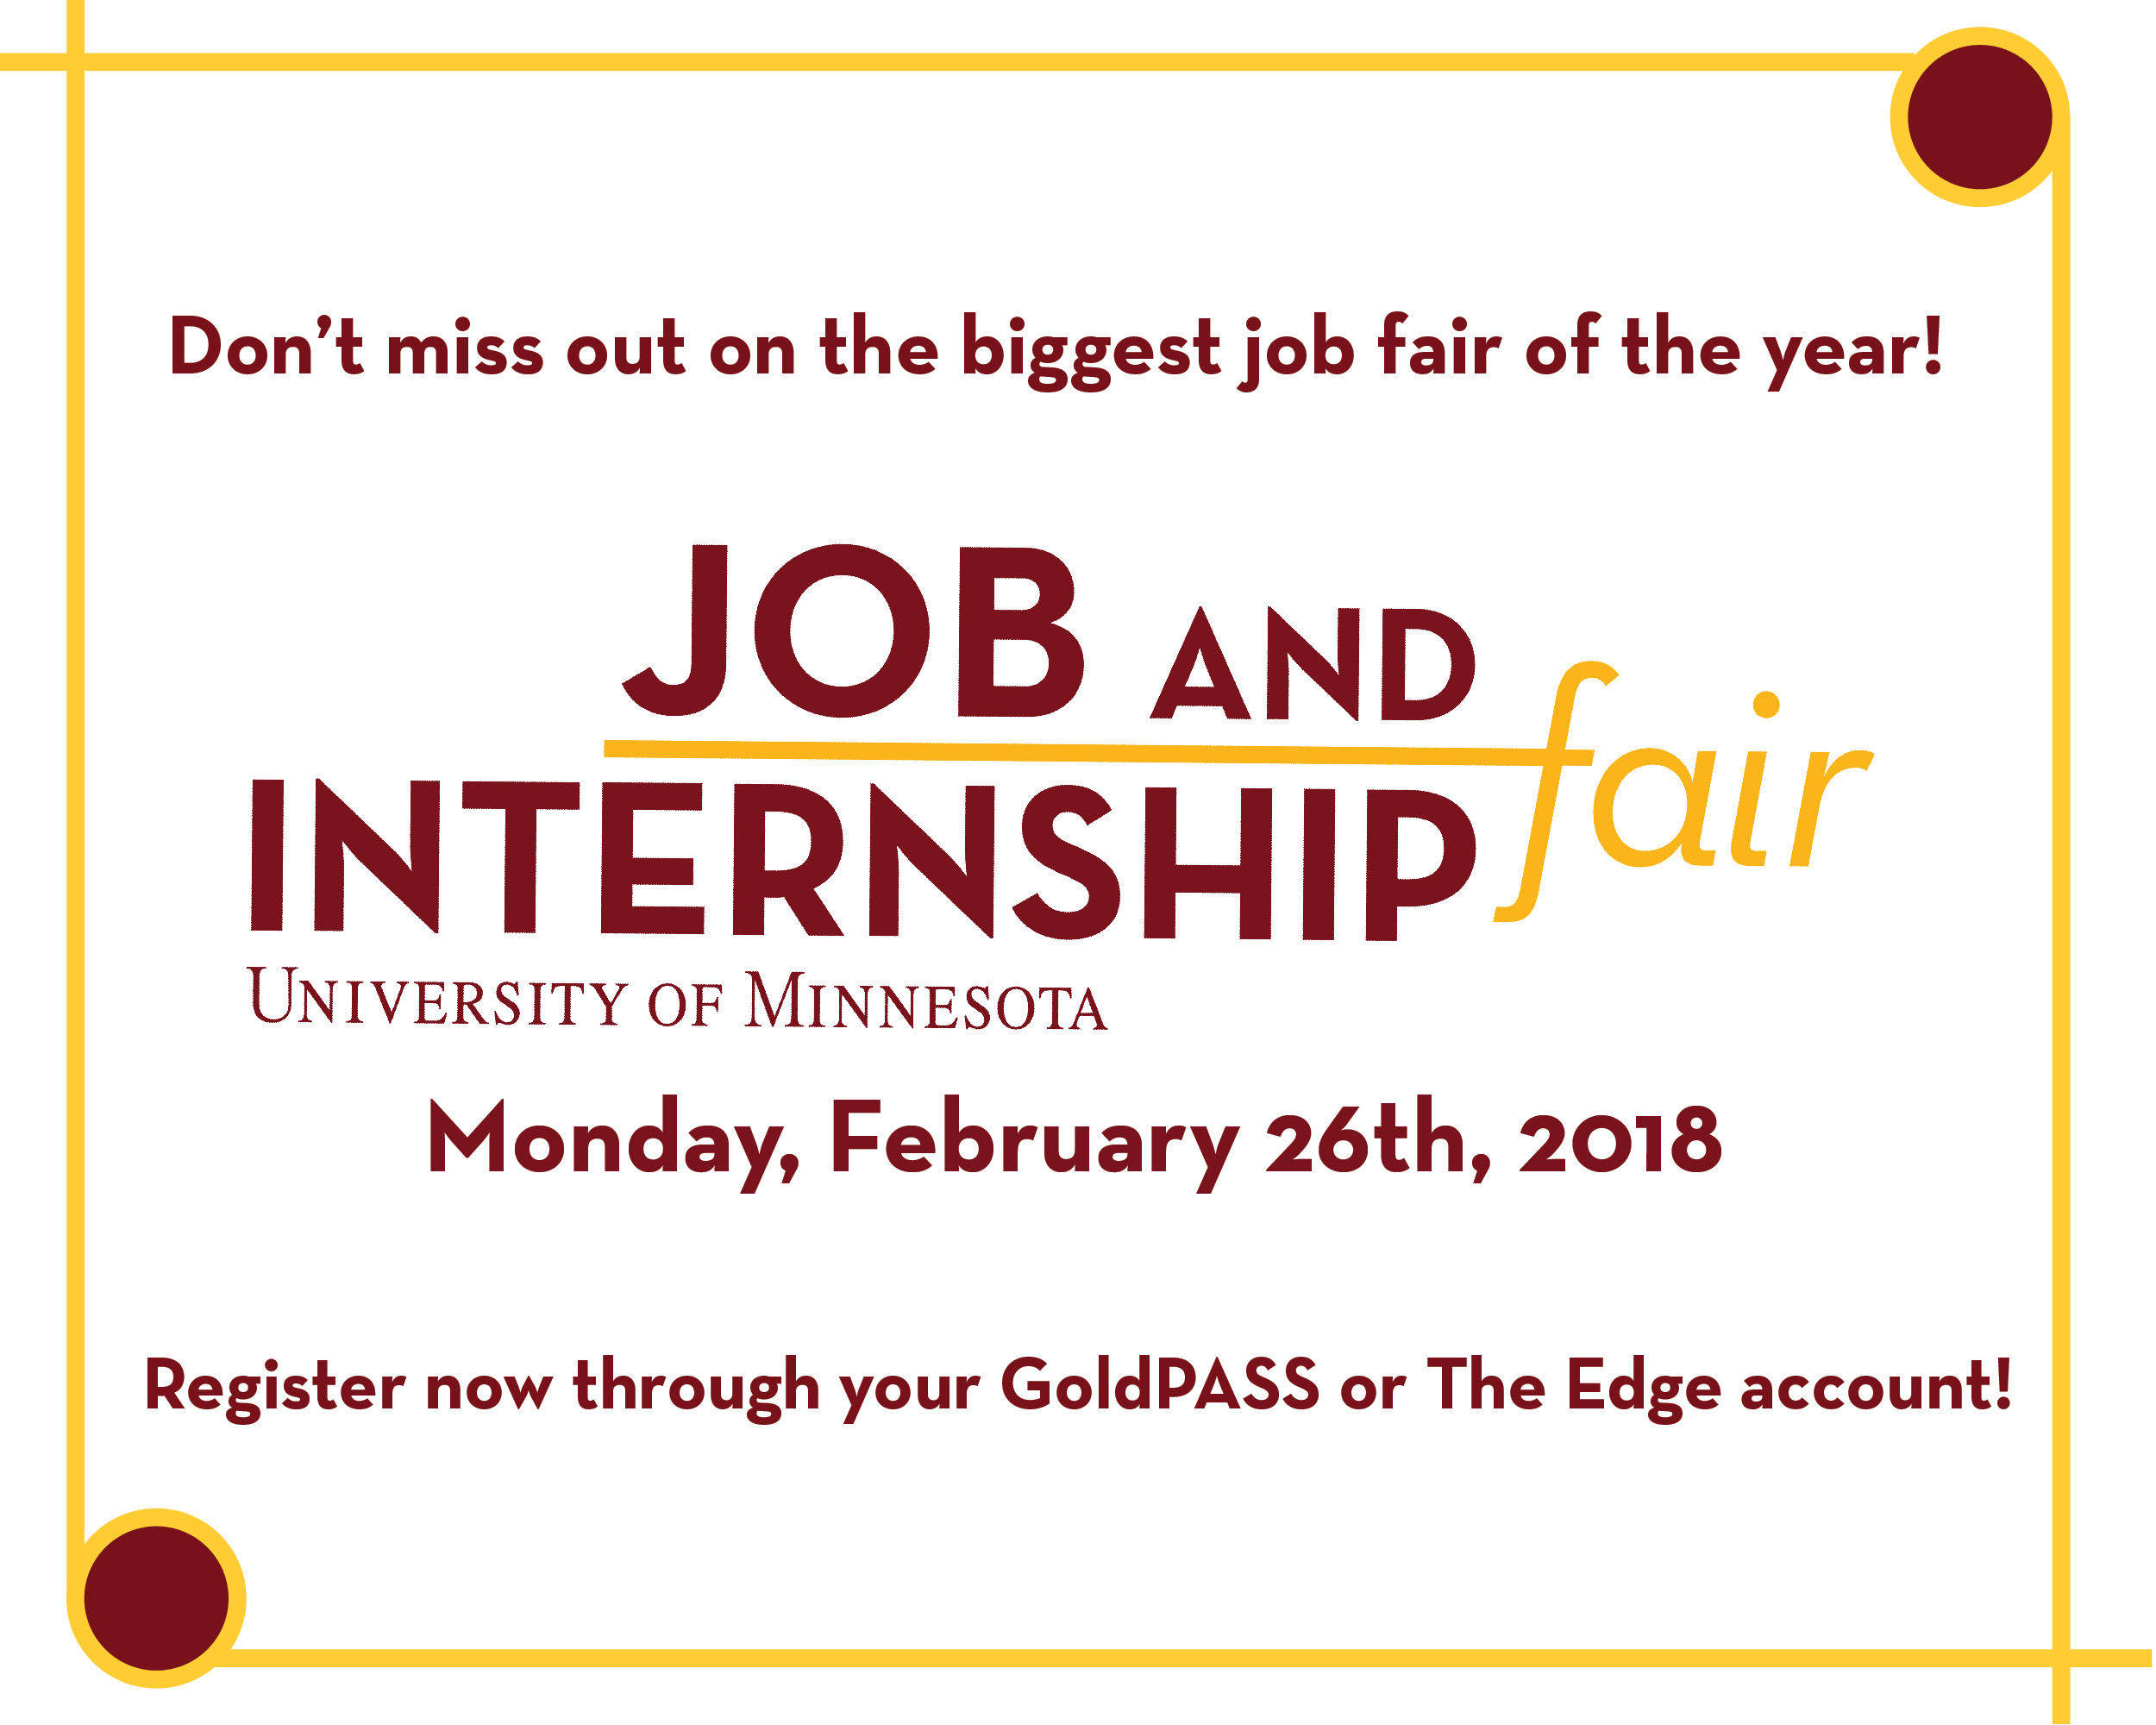 ad for the University of Minnesota Job and Internship Fair - Monday, February 26th, 2018. \